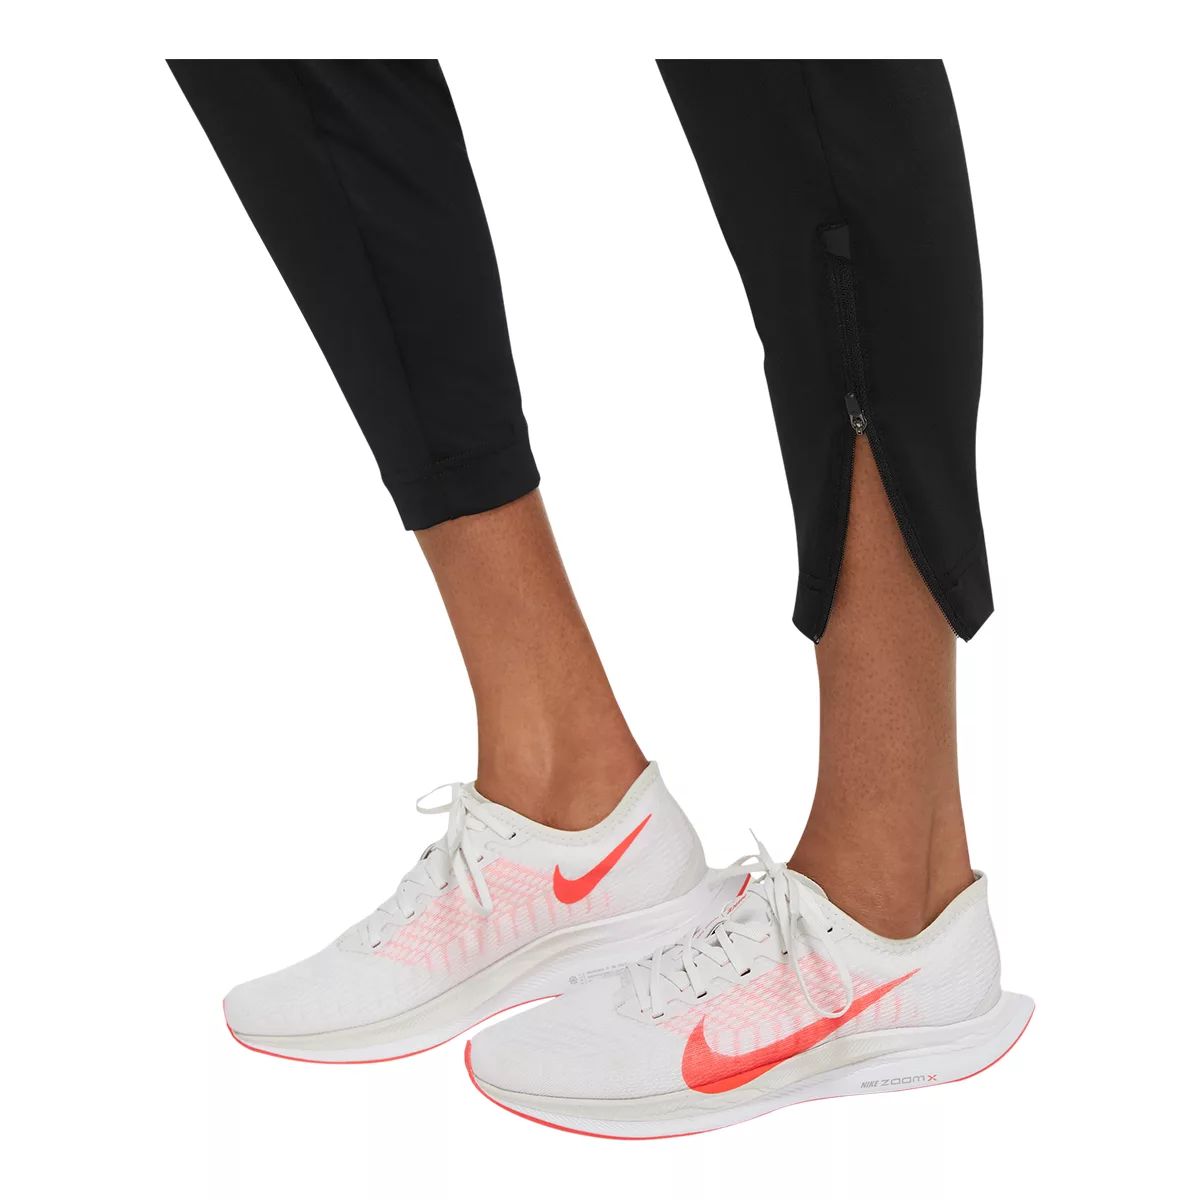 Nike Dri-FIT Essential Women's Running Trousers. Nike ID